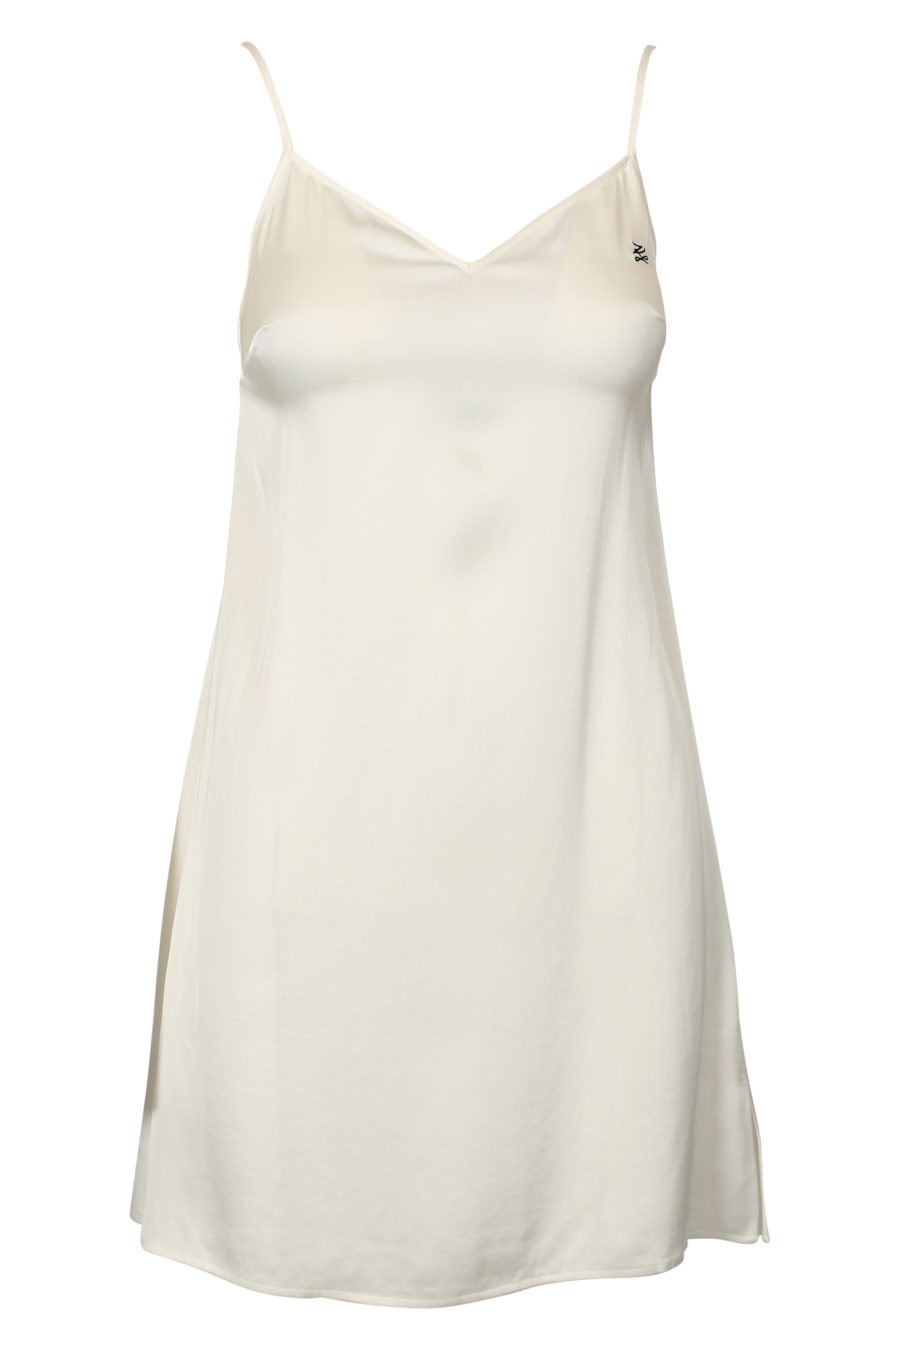 Off-white satin dress - IMG 3027